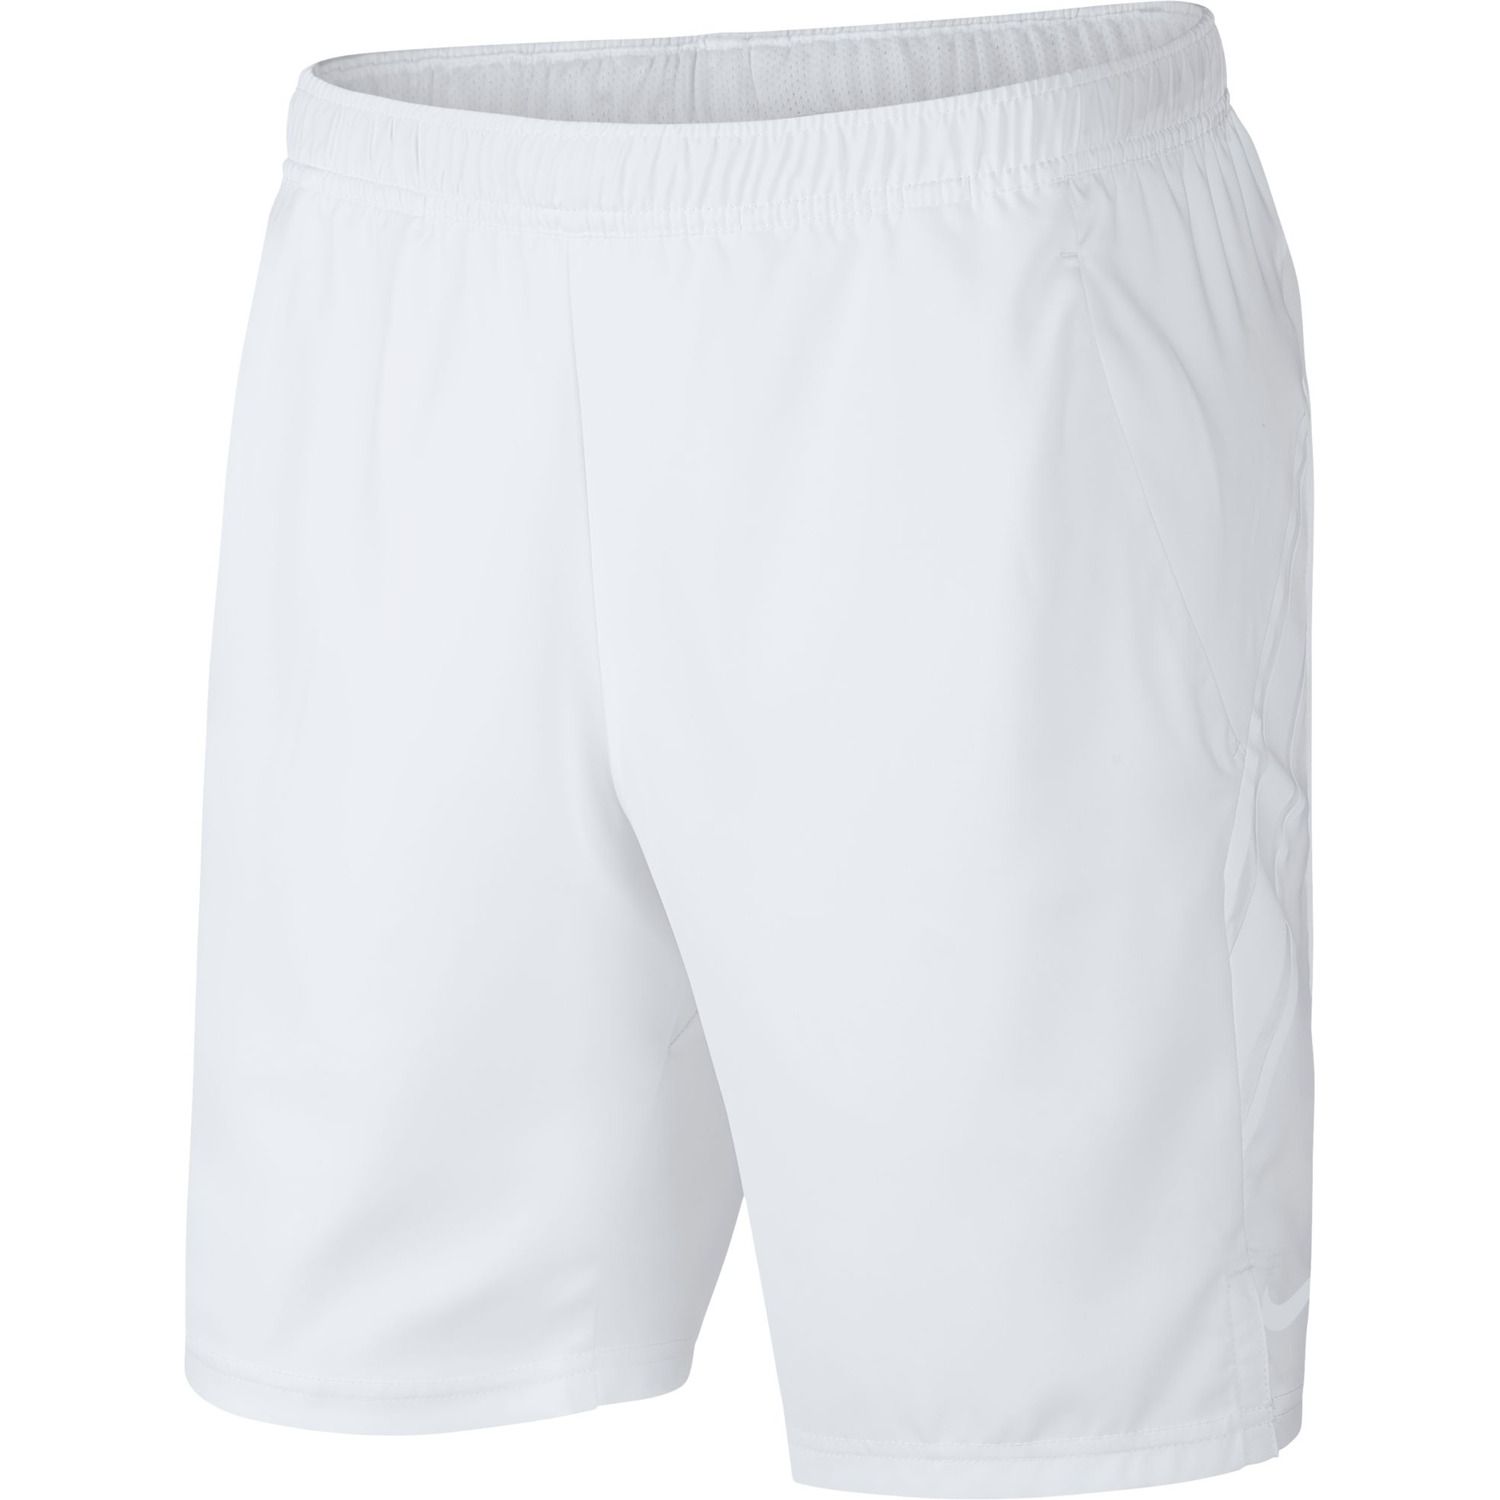 nike tennis shorts white